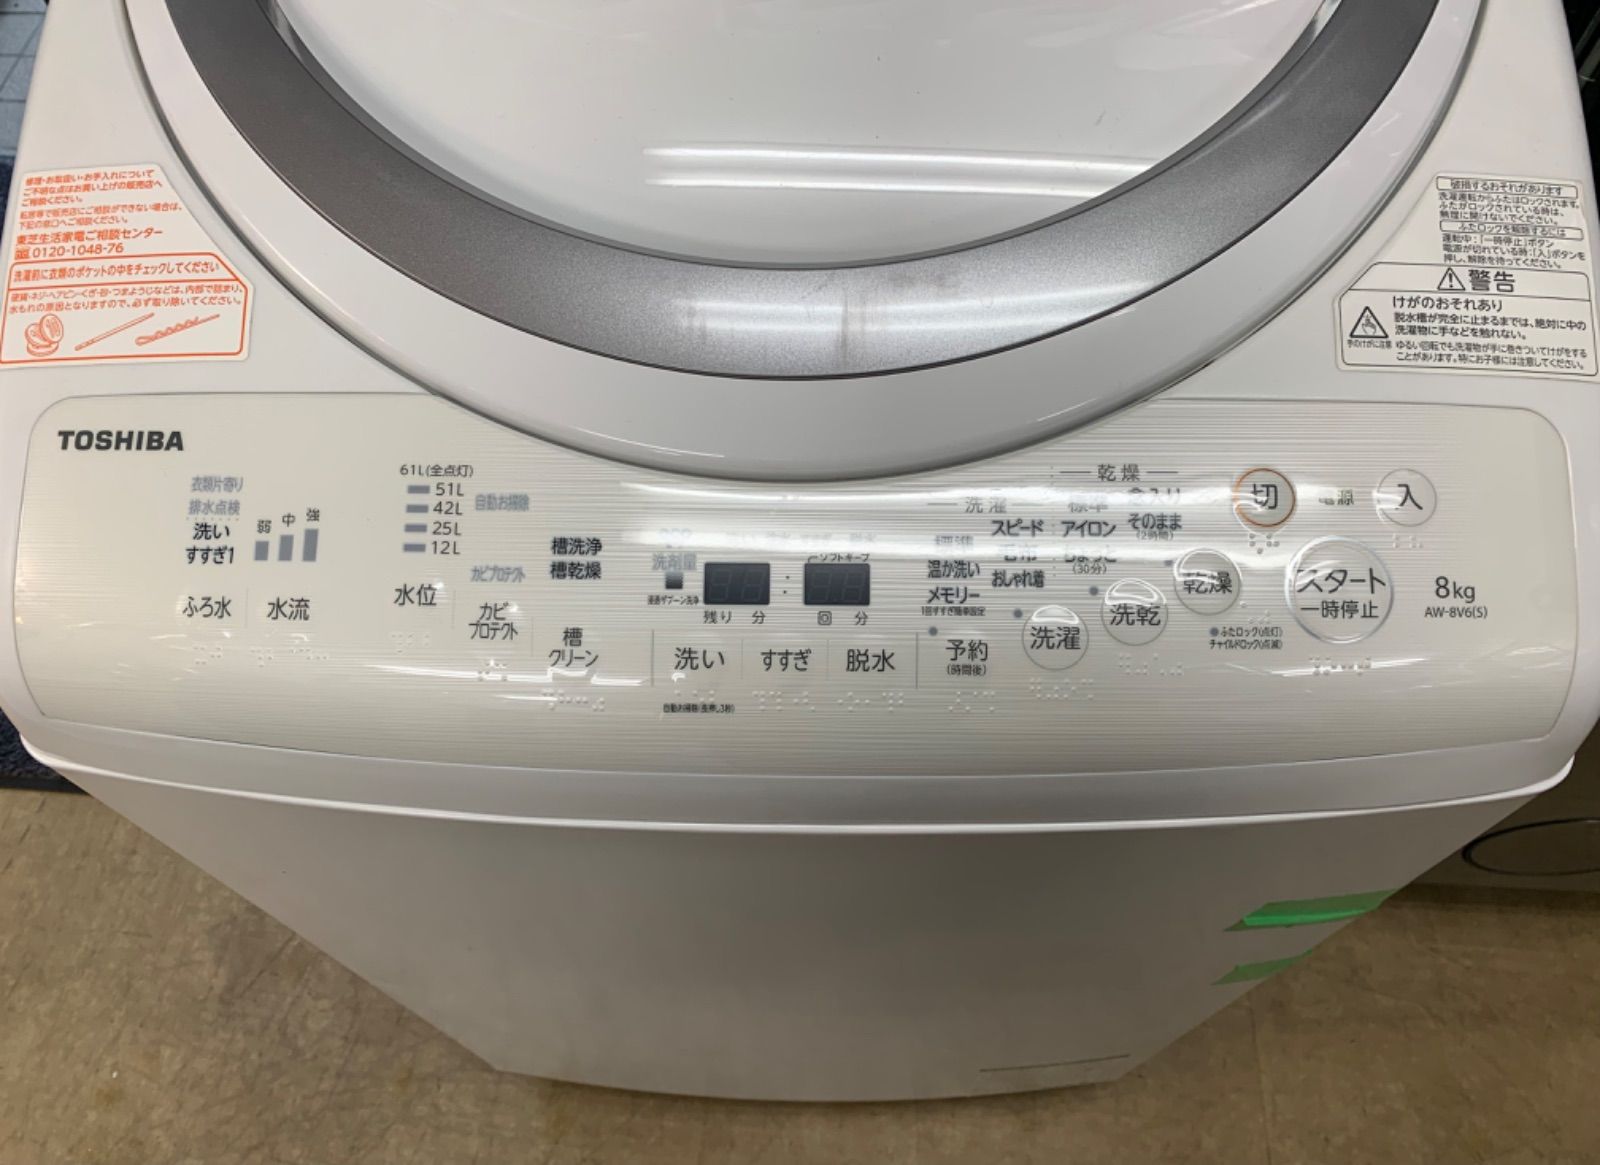 TOSHIBA 電気洗濯機乾燥機 2018年製 AW-8V6 8kg/4.5kg - 生活家電